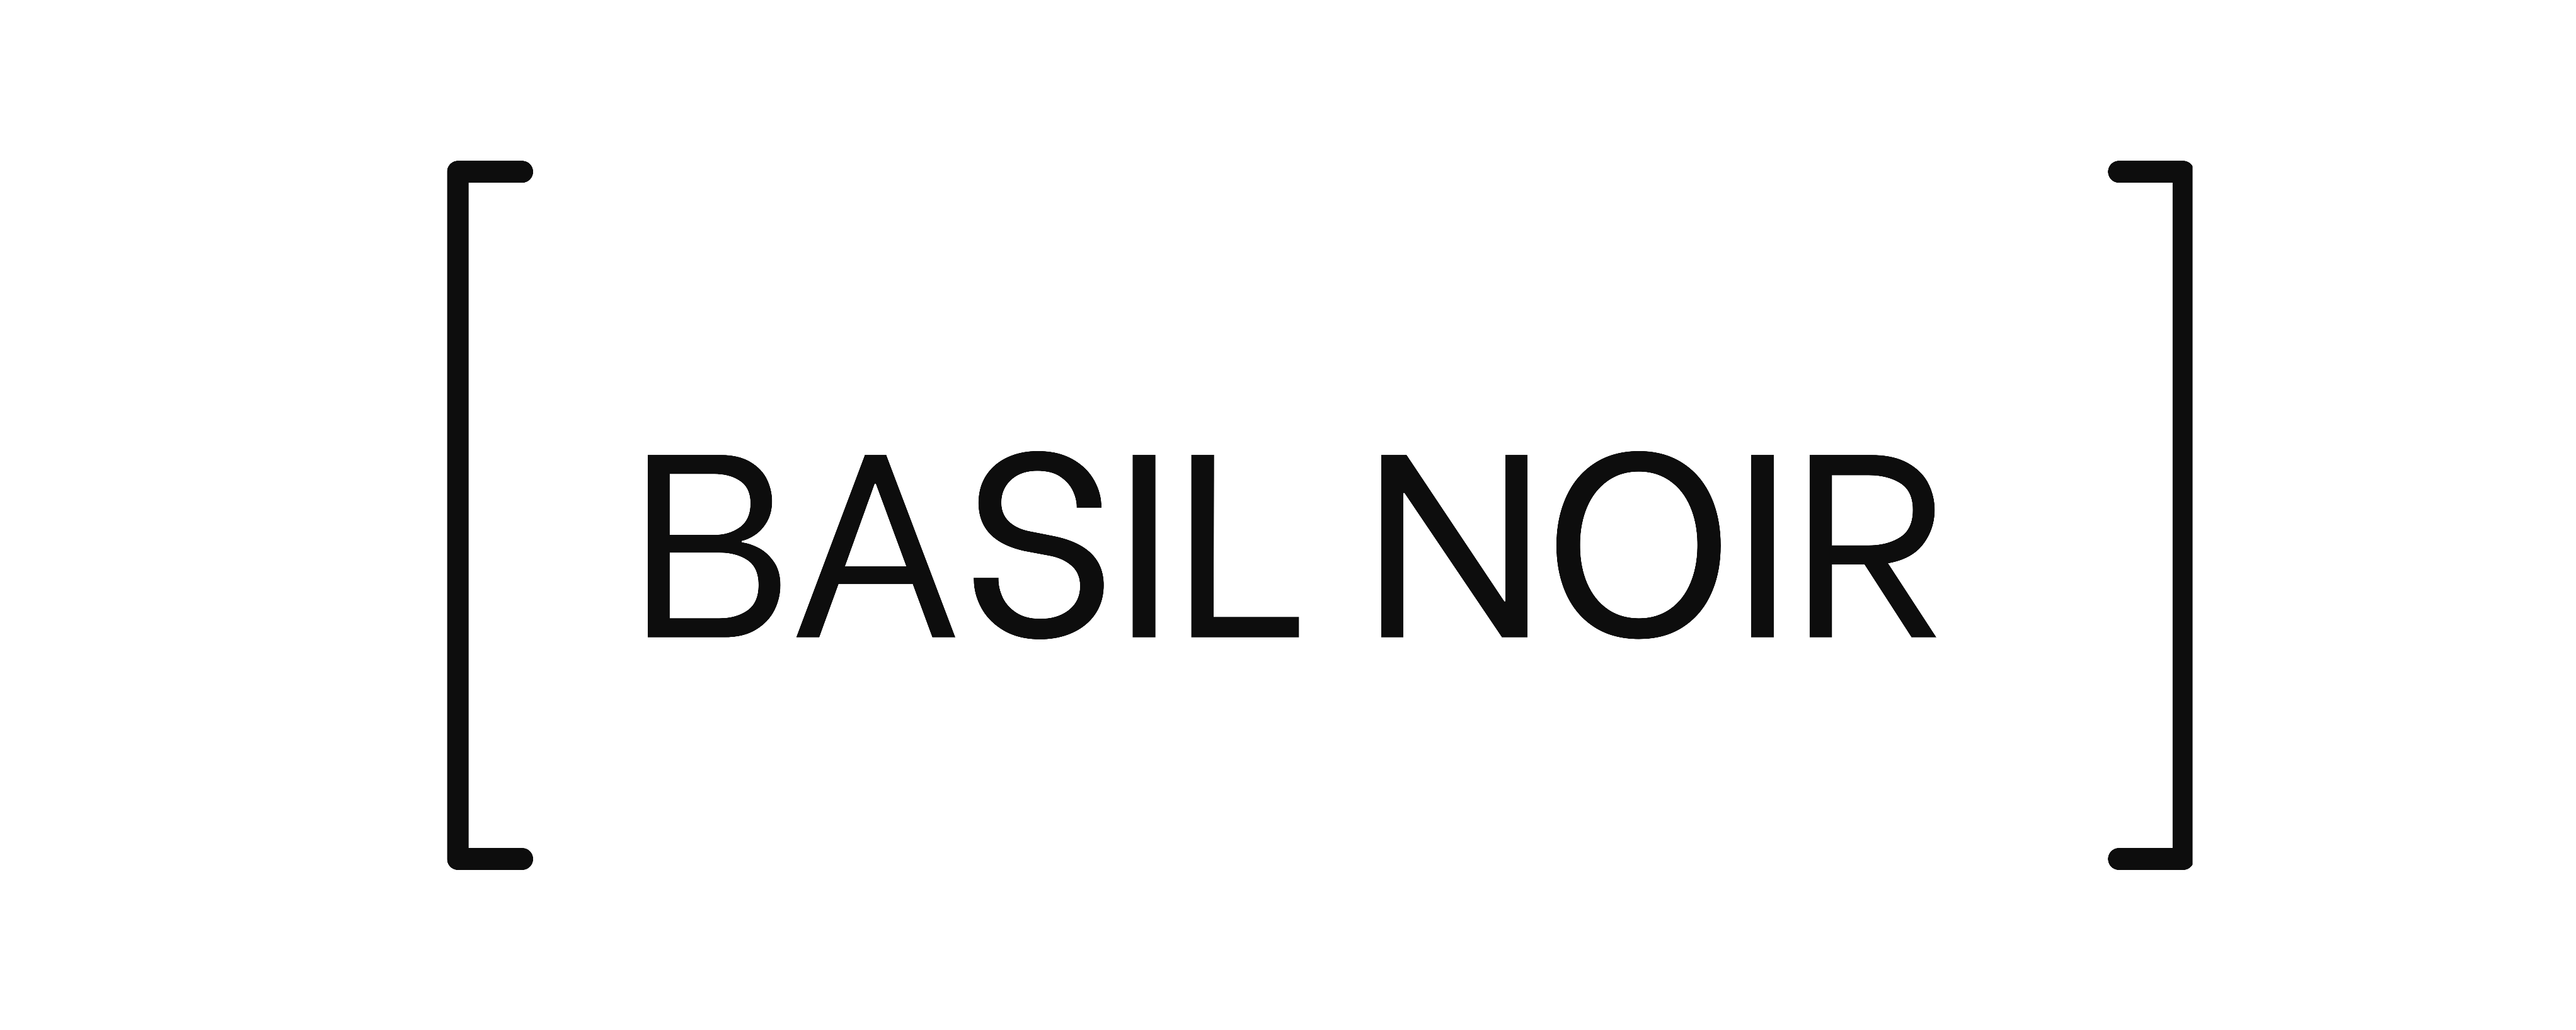 Basil Noir